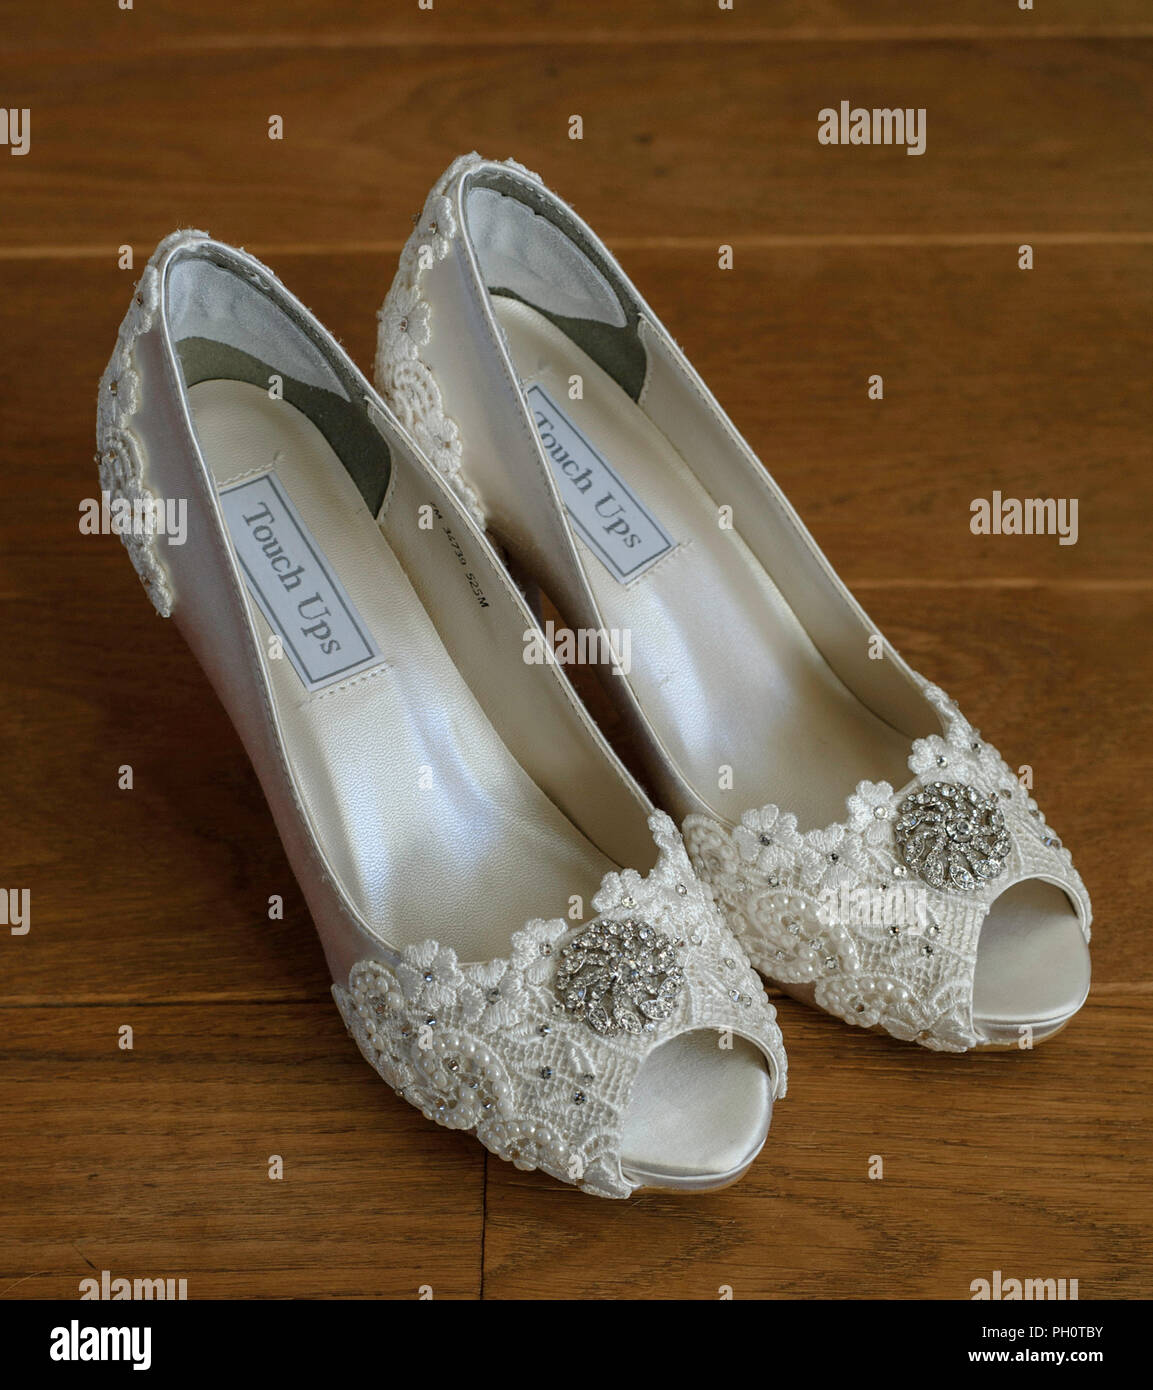 wedding shoes Stock Photo - Alamy